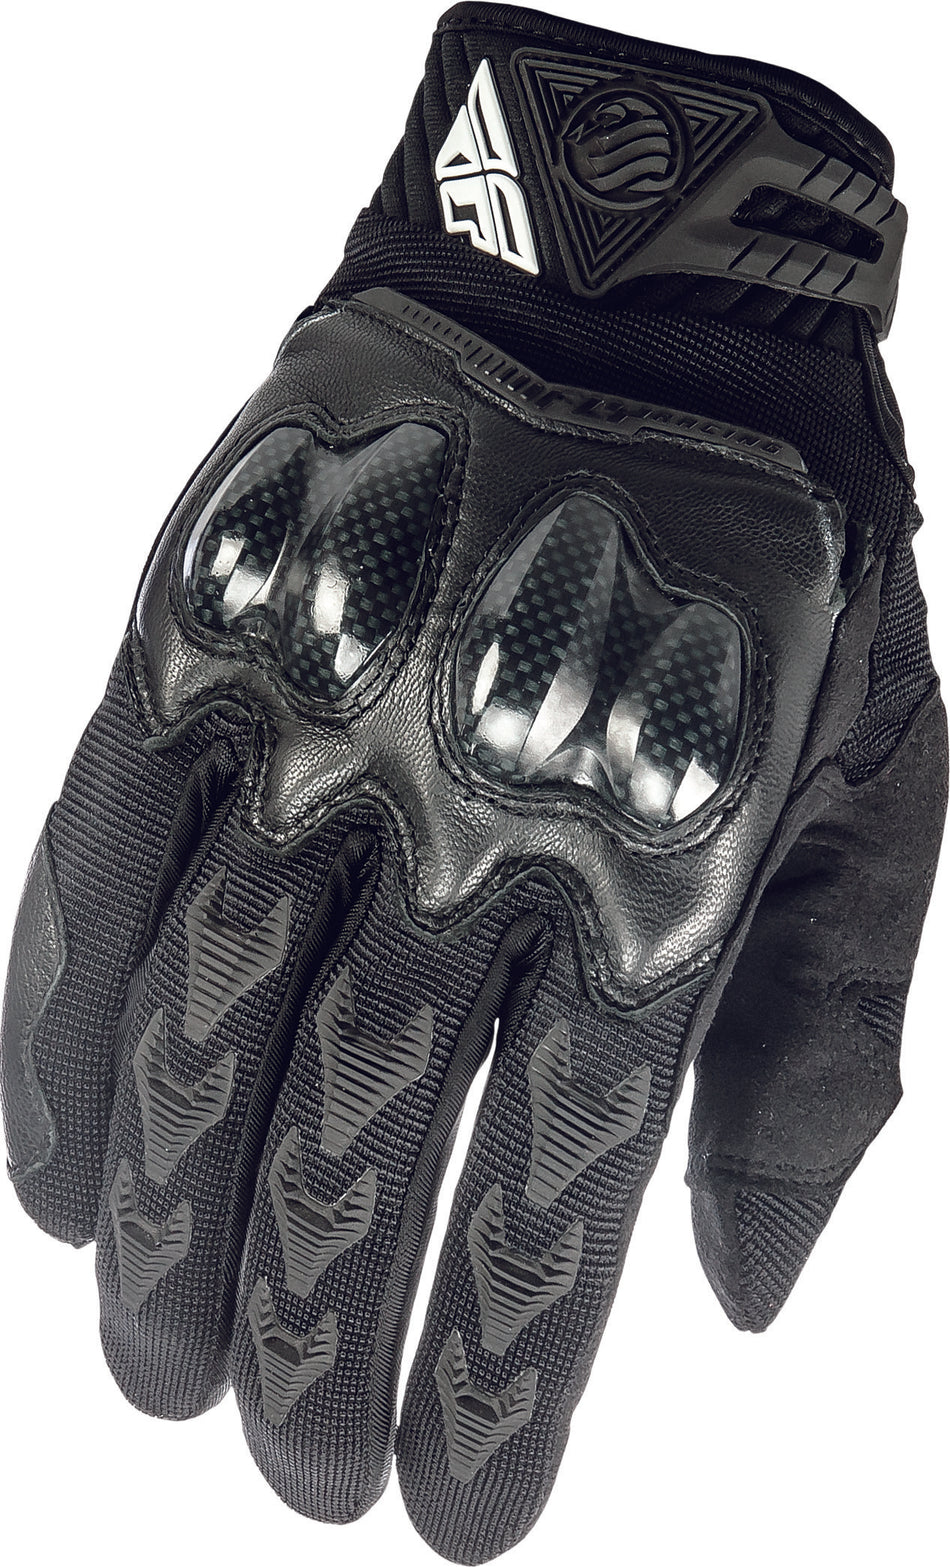 FLY RACING Patrol Xc Gloves Black Sz 12 369-06012